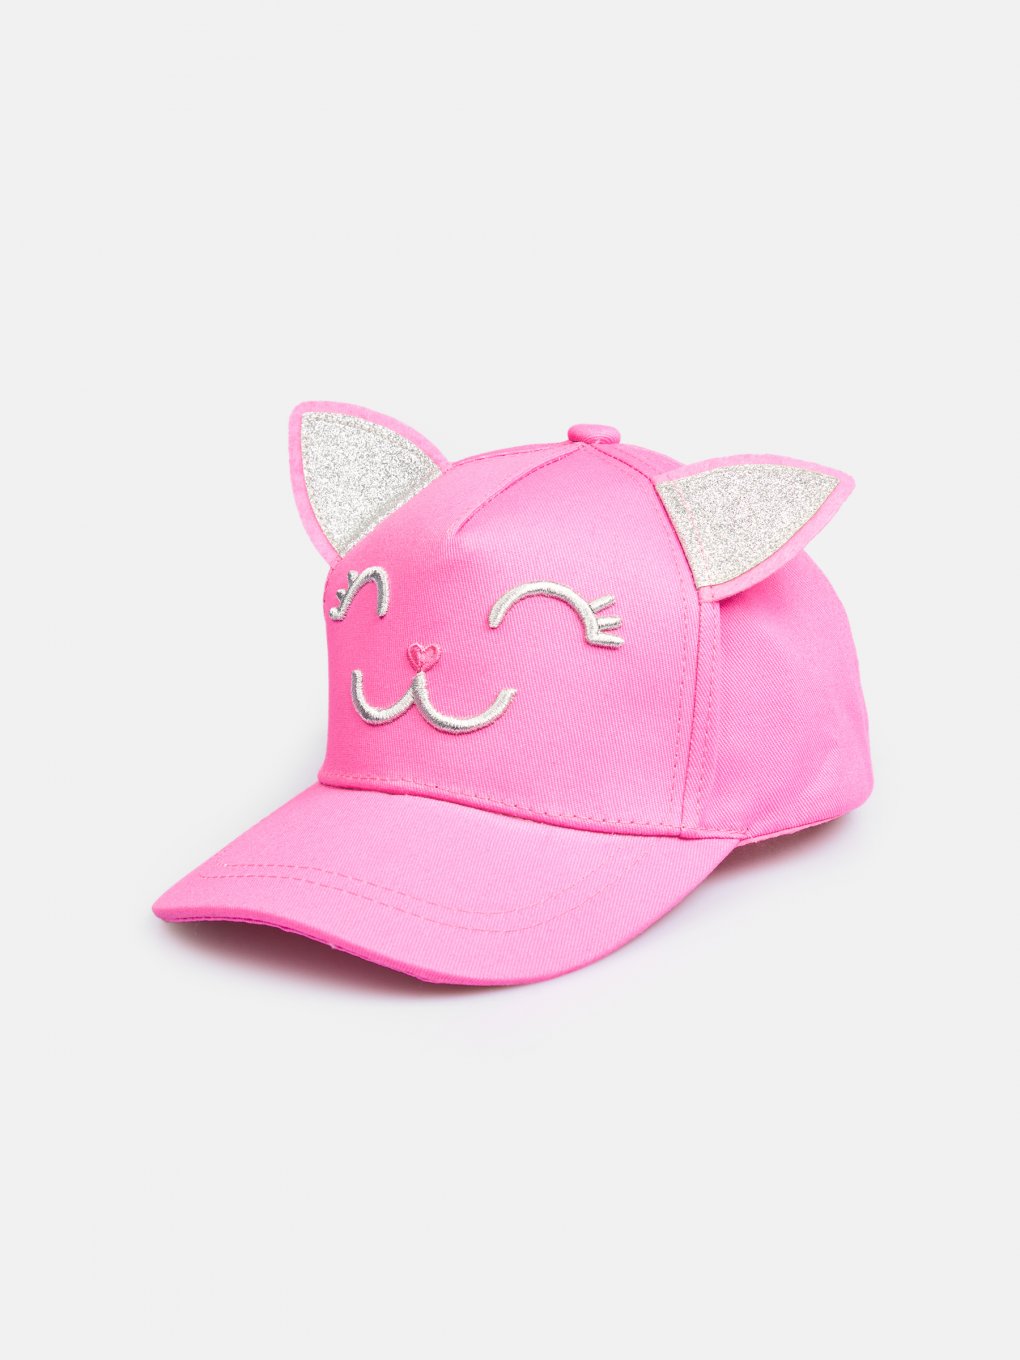 Baseball cap with ears